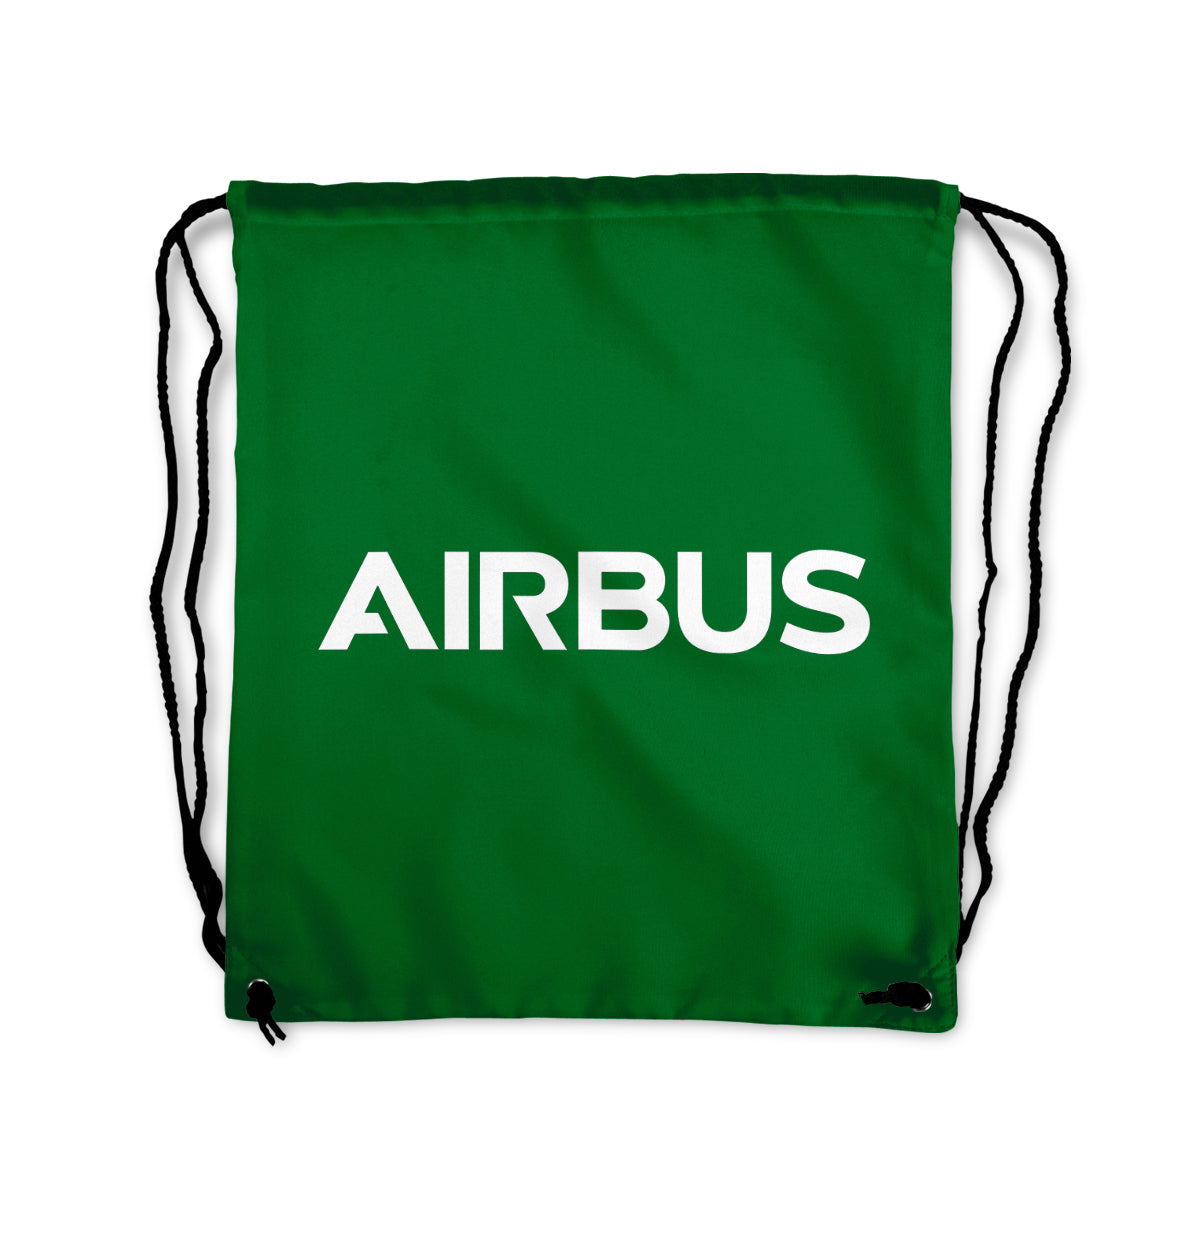 Airbus & Text Designed Drawstring Bags